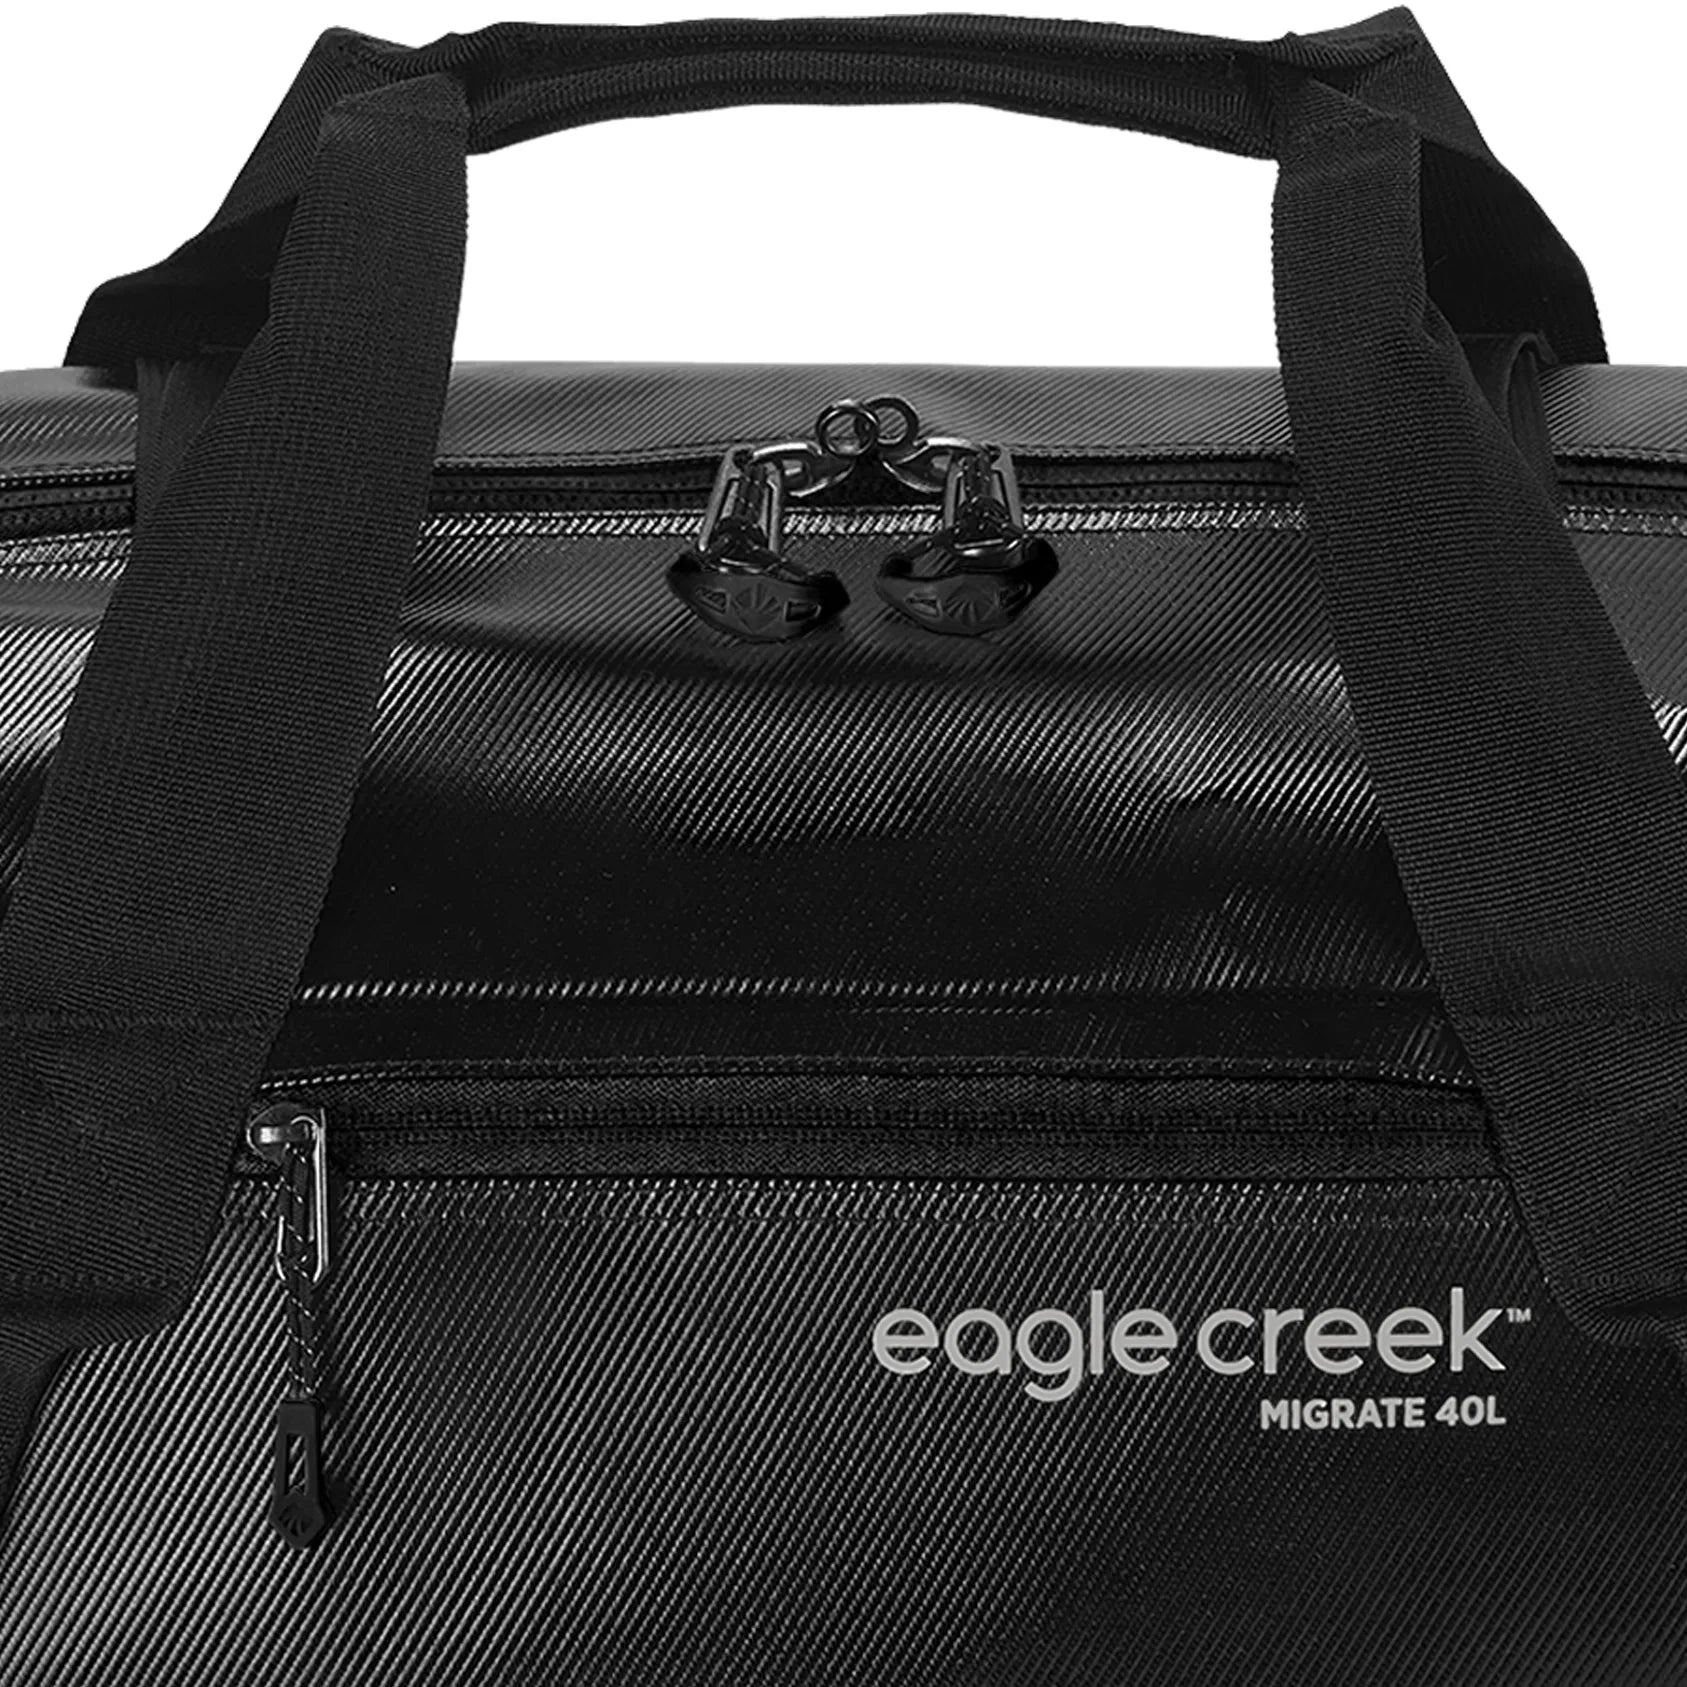 Eagle Creek Migrate sac de voyage 47 cm - bleu mesa